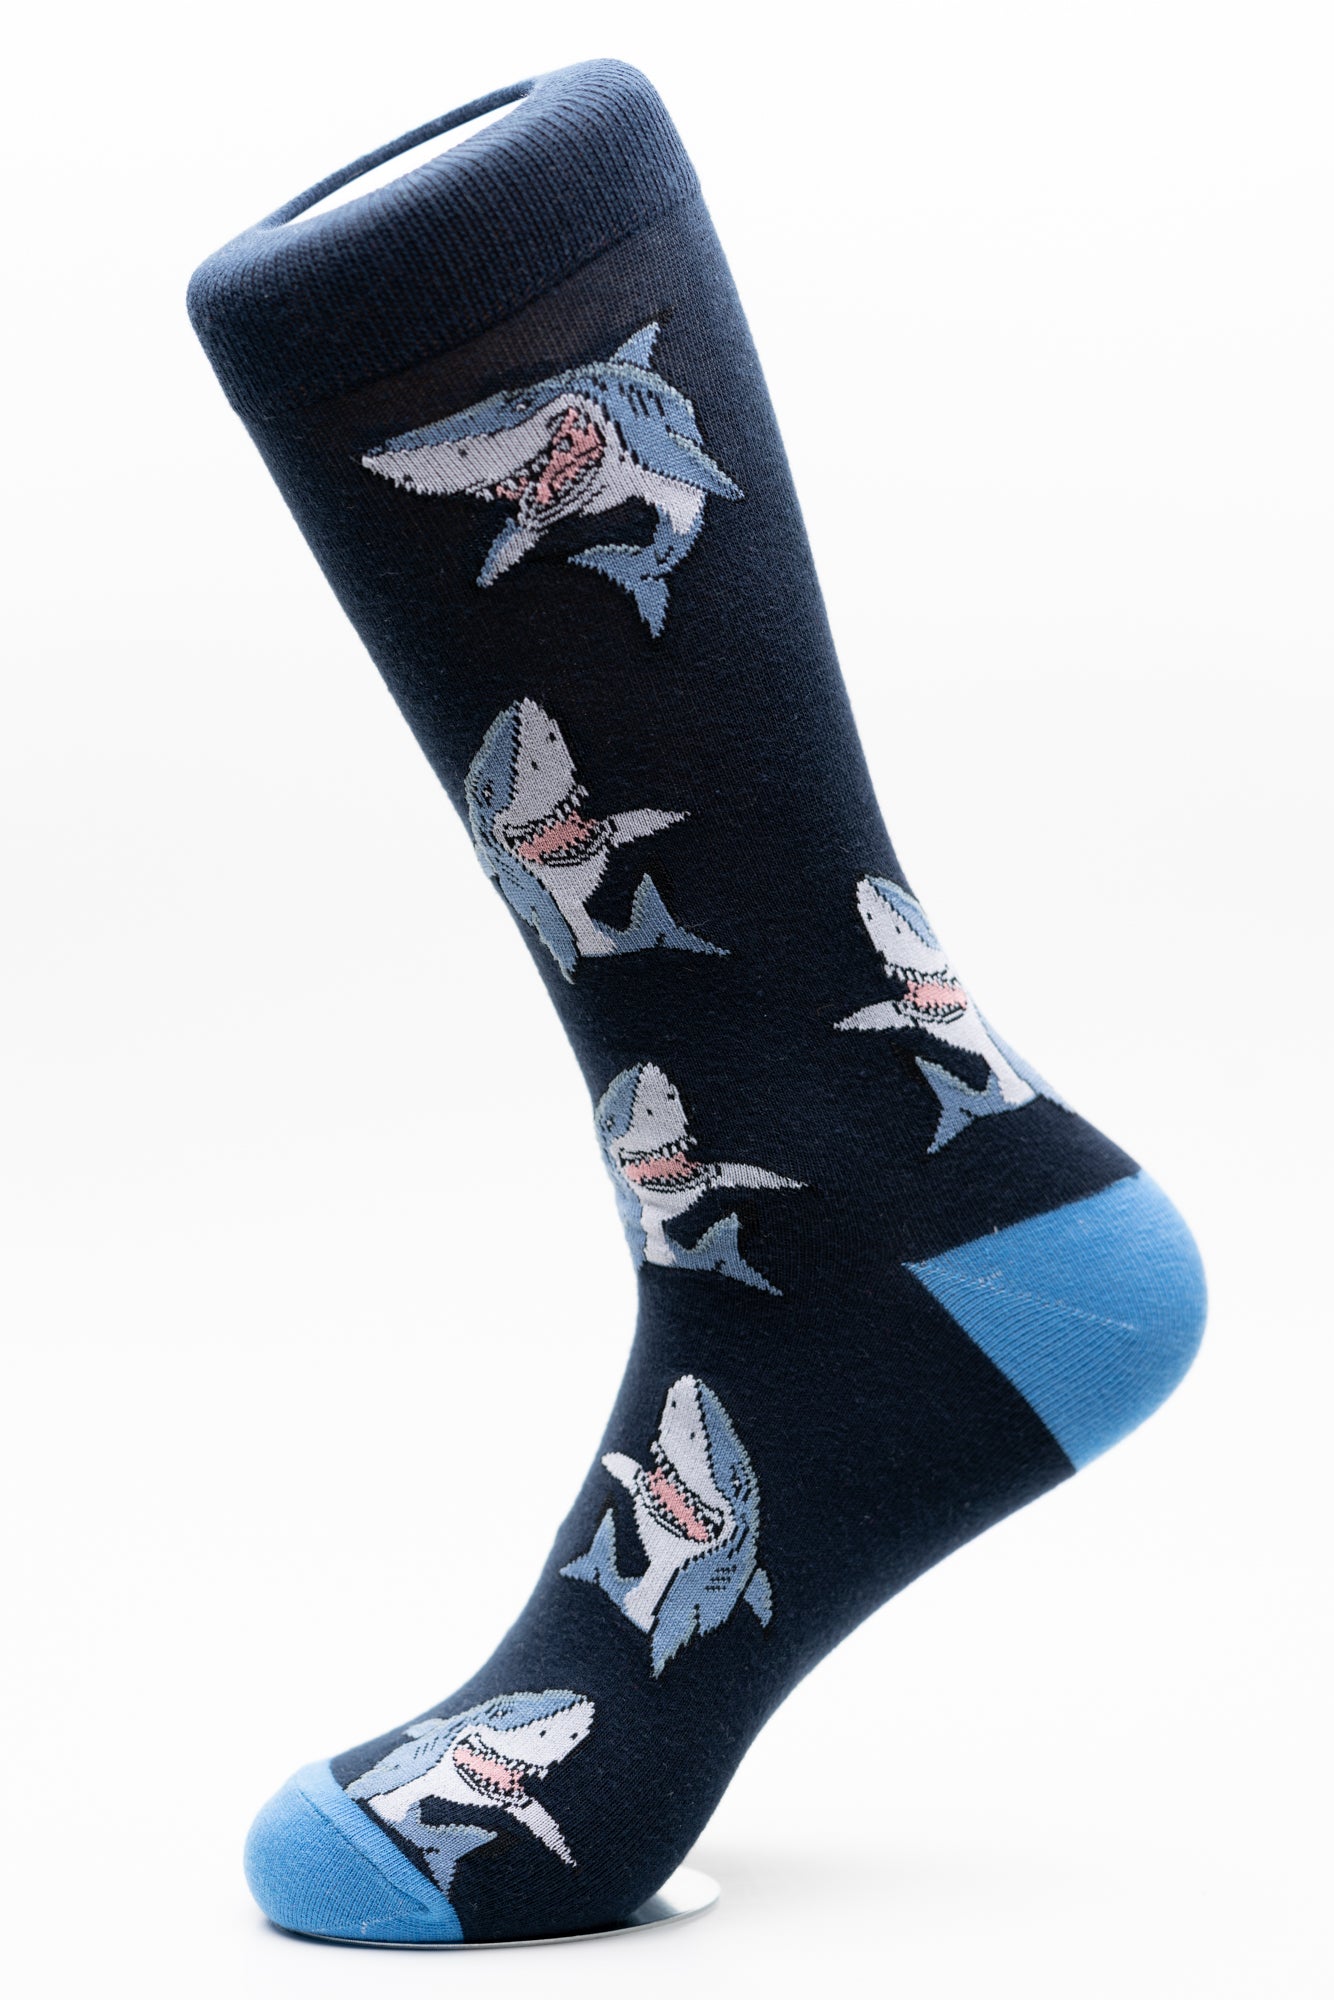 Sharks fun crew socks